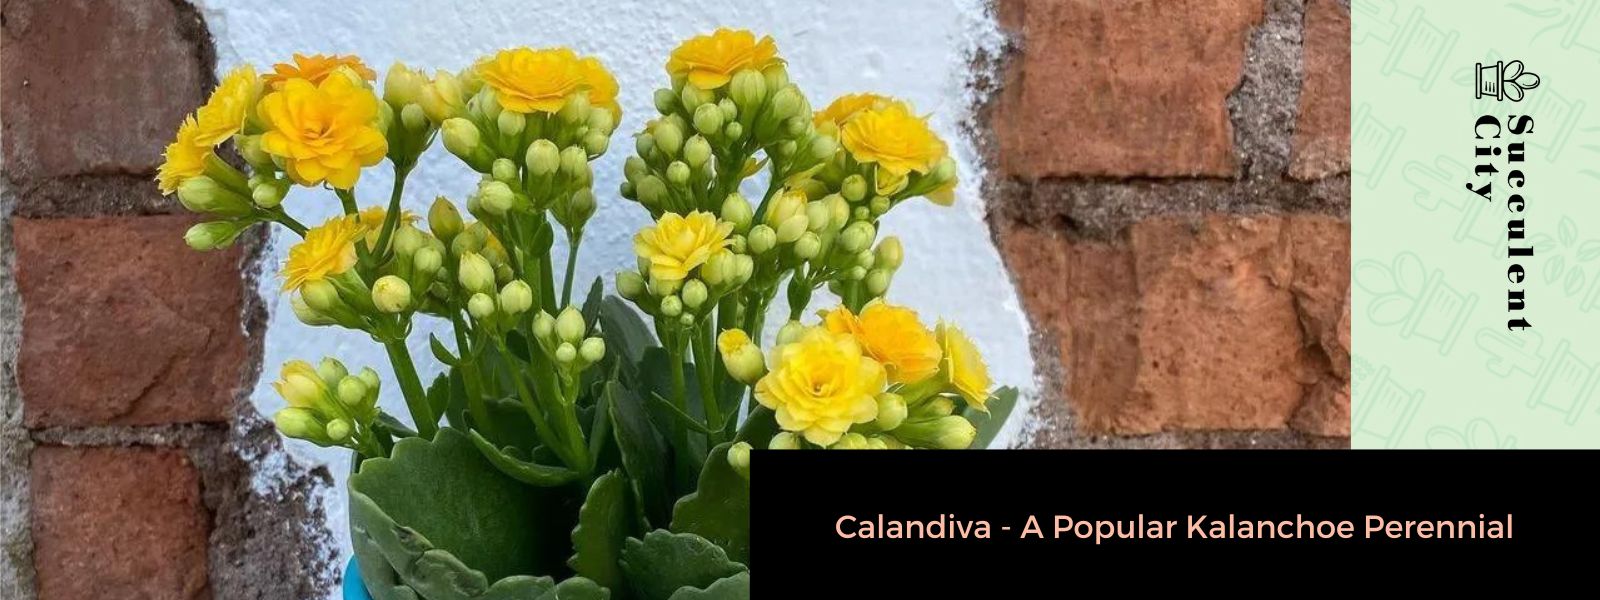 Calandiva: una popular planta perenne de Kalanchoe